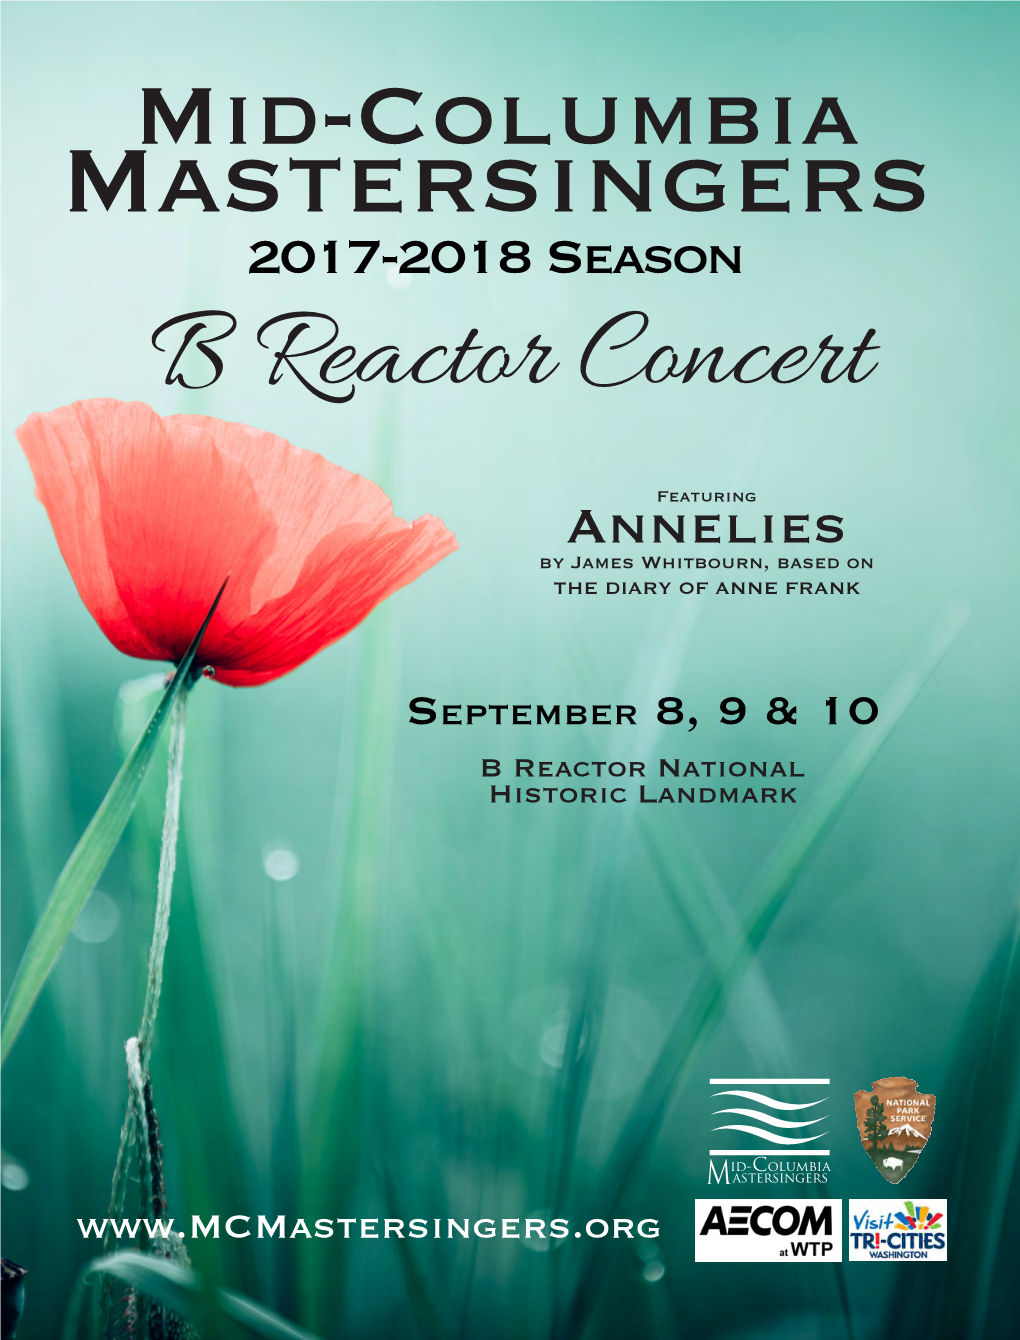 Mid-Columbia Mastersingers 2017-2018 Season B Reactor Concert